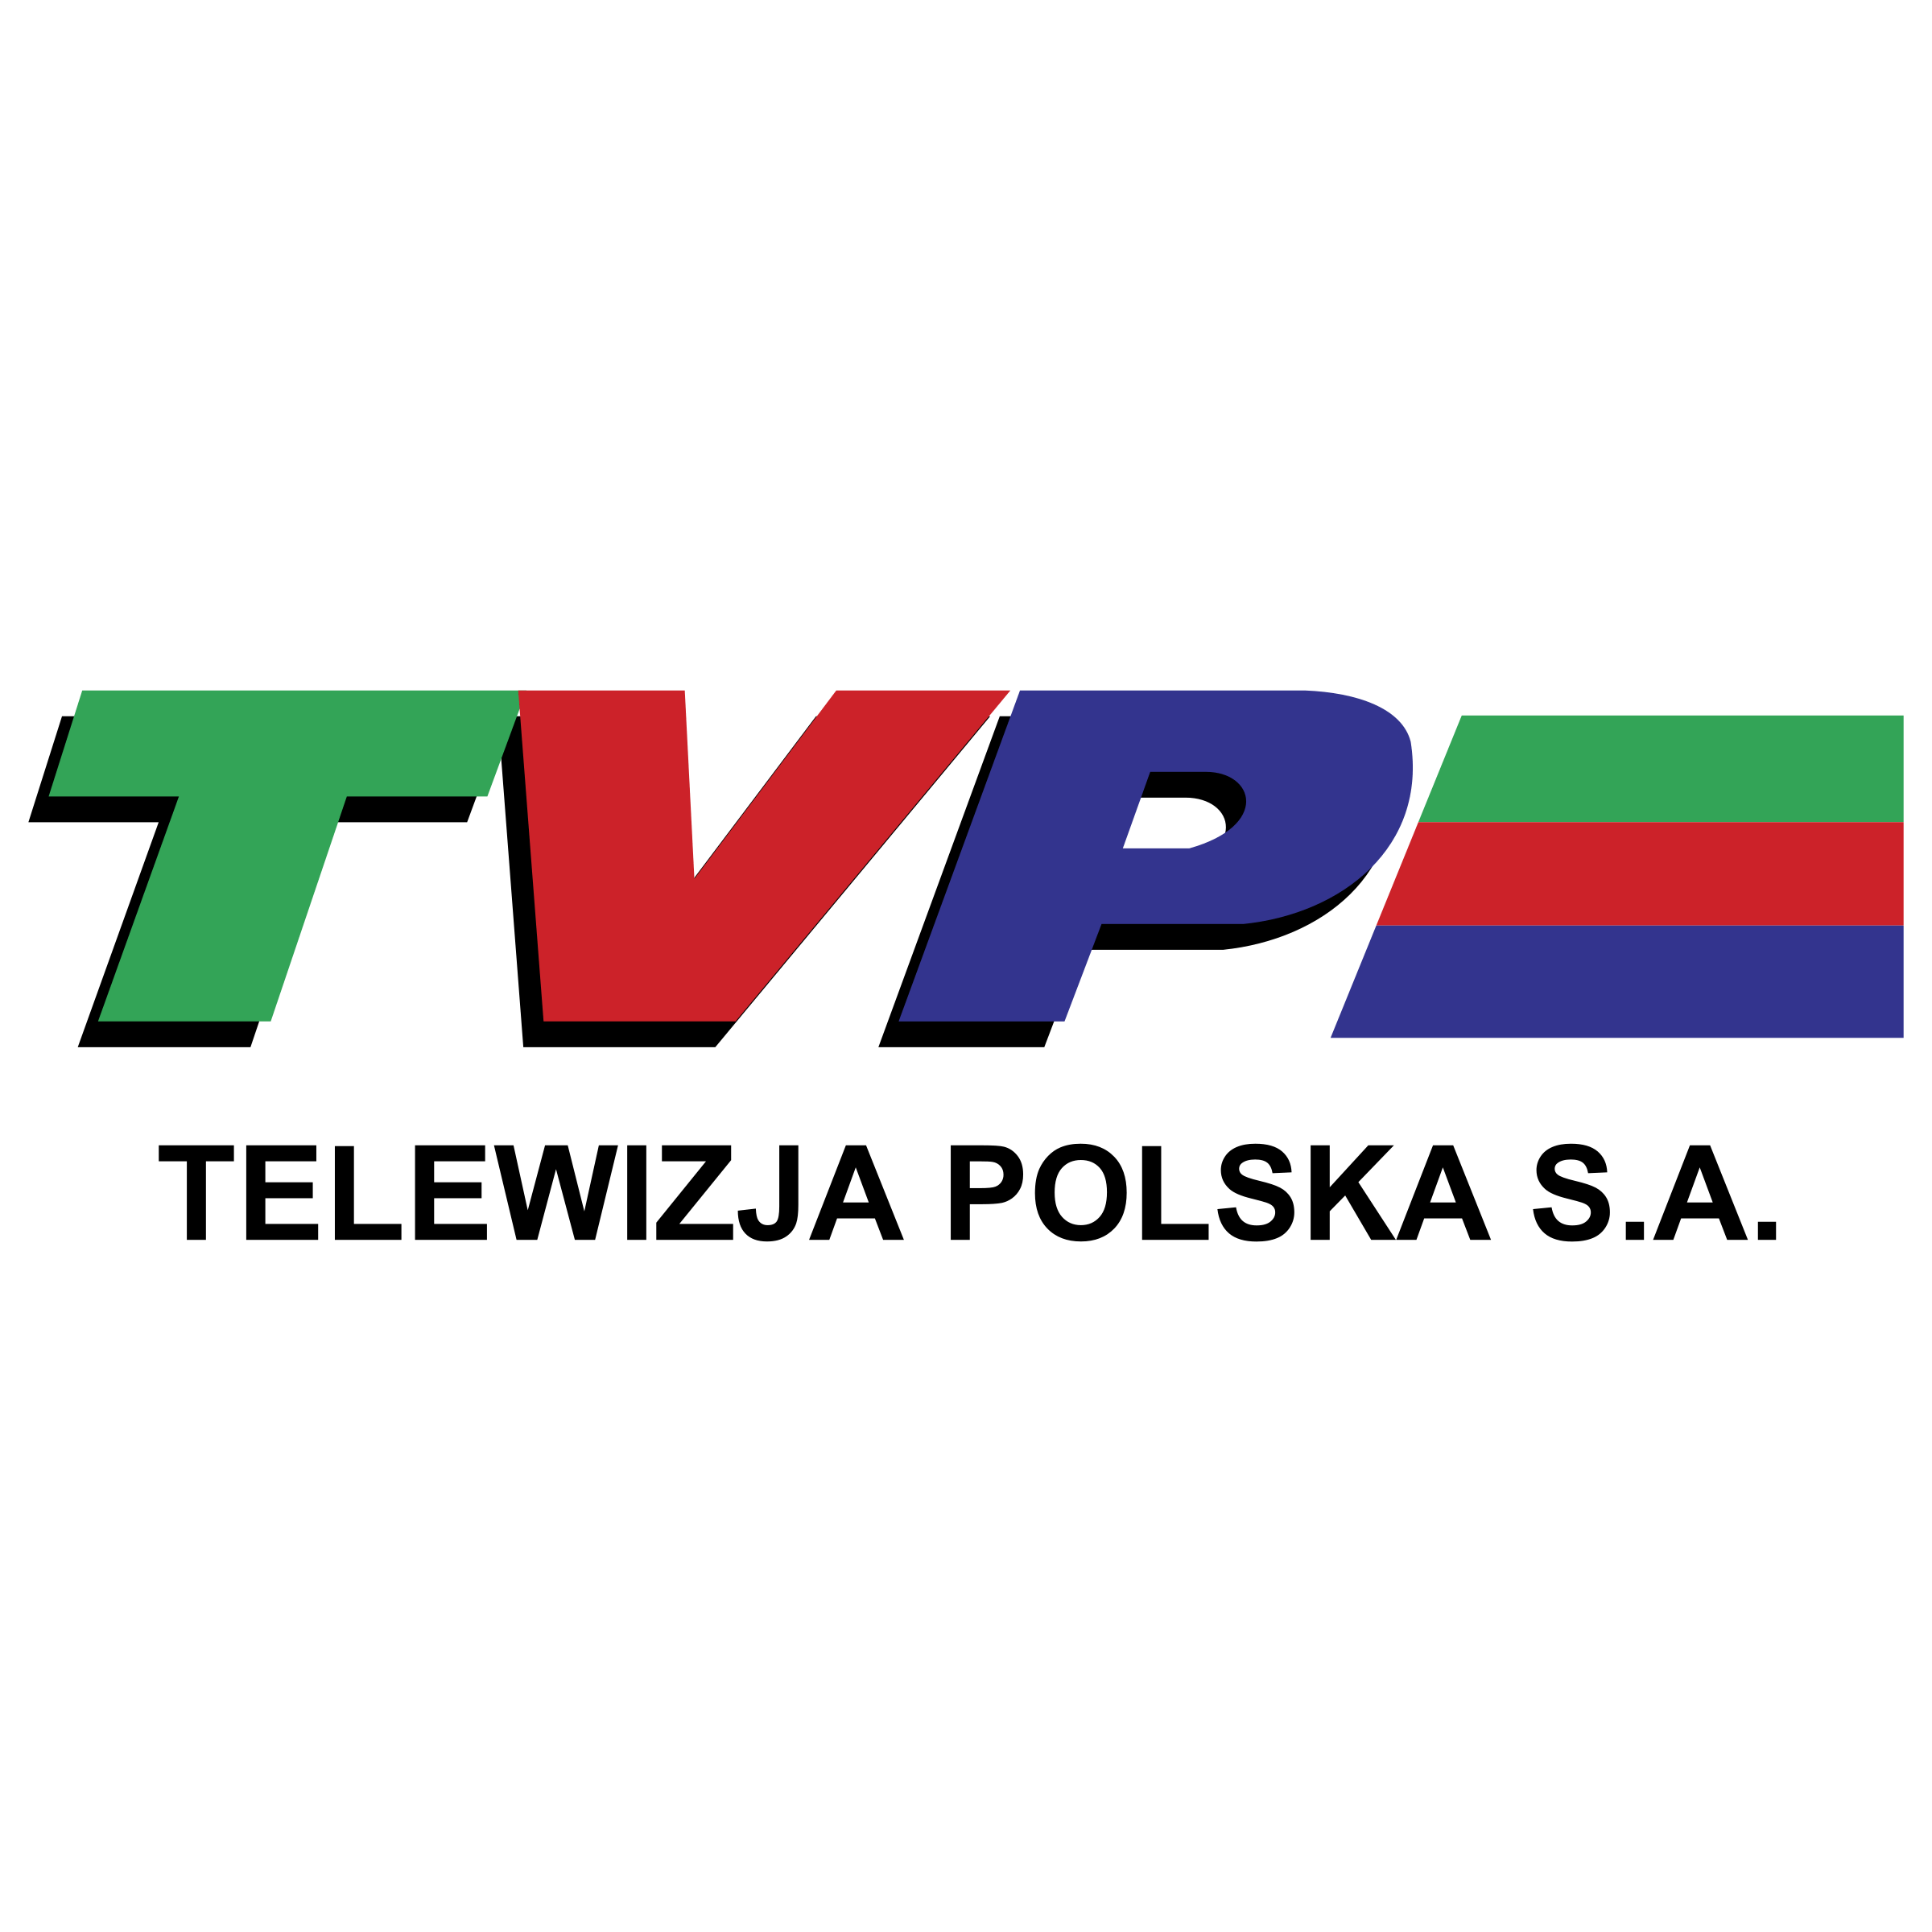 TVP Logo - TVP Logo PNG Transparent & SVG Vector